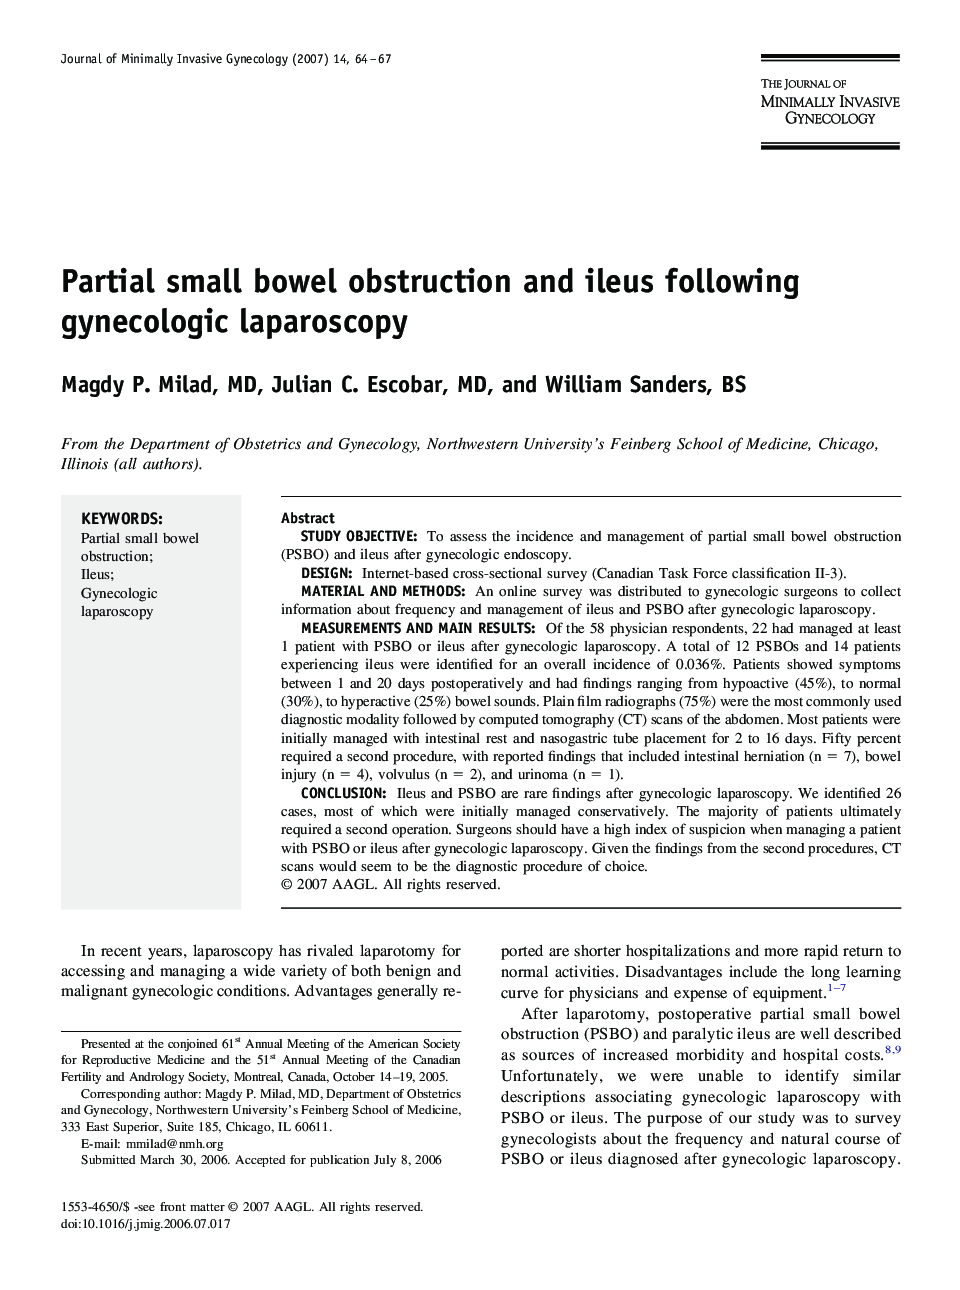 Partial small bowel obstruction and ileus following gynecologic laparoscopy